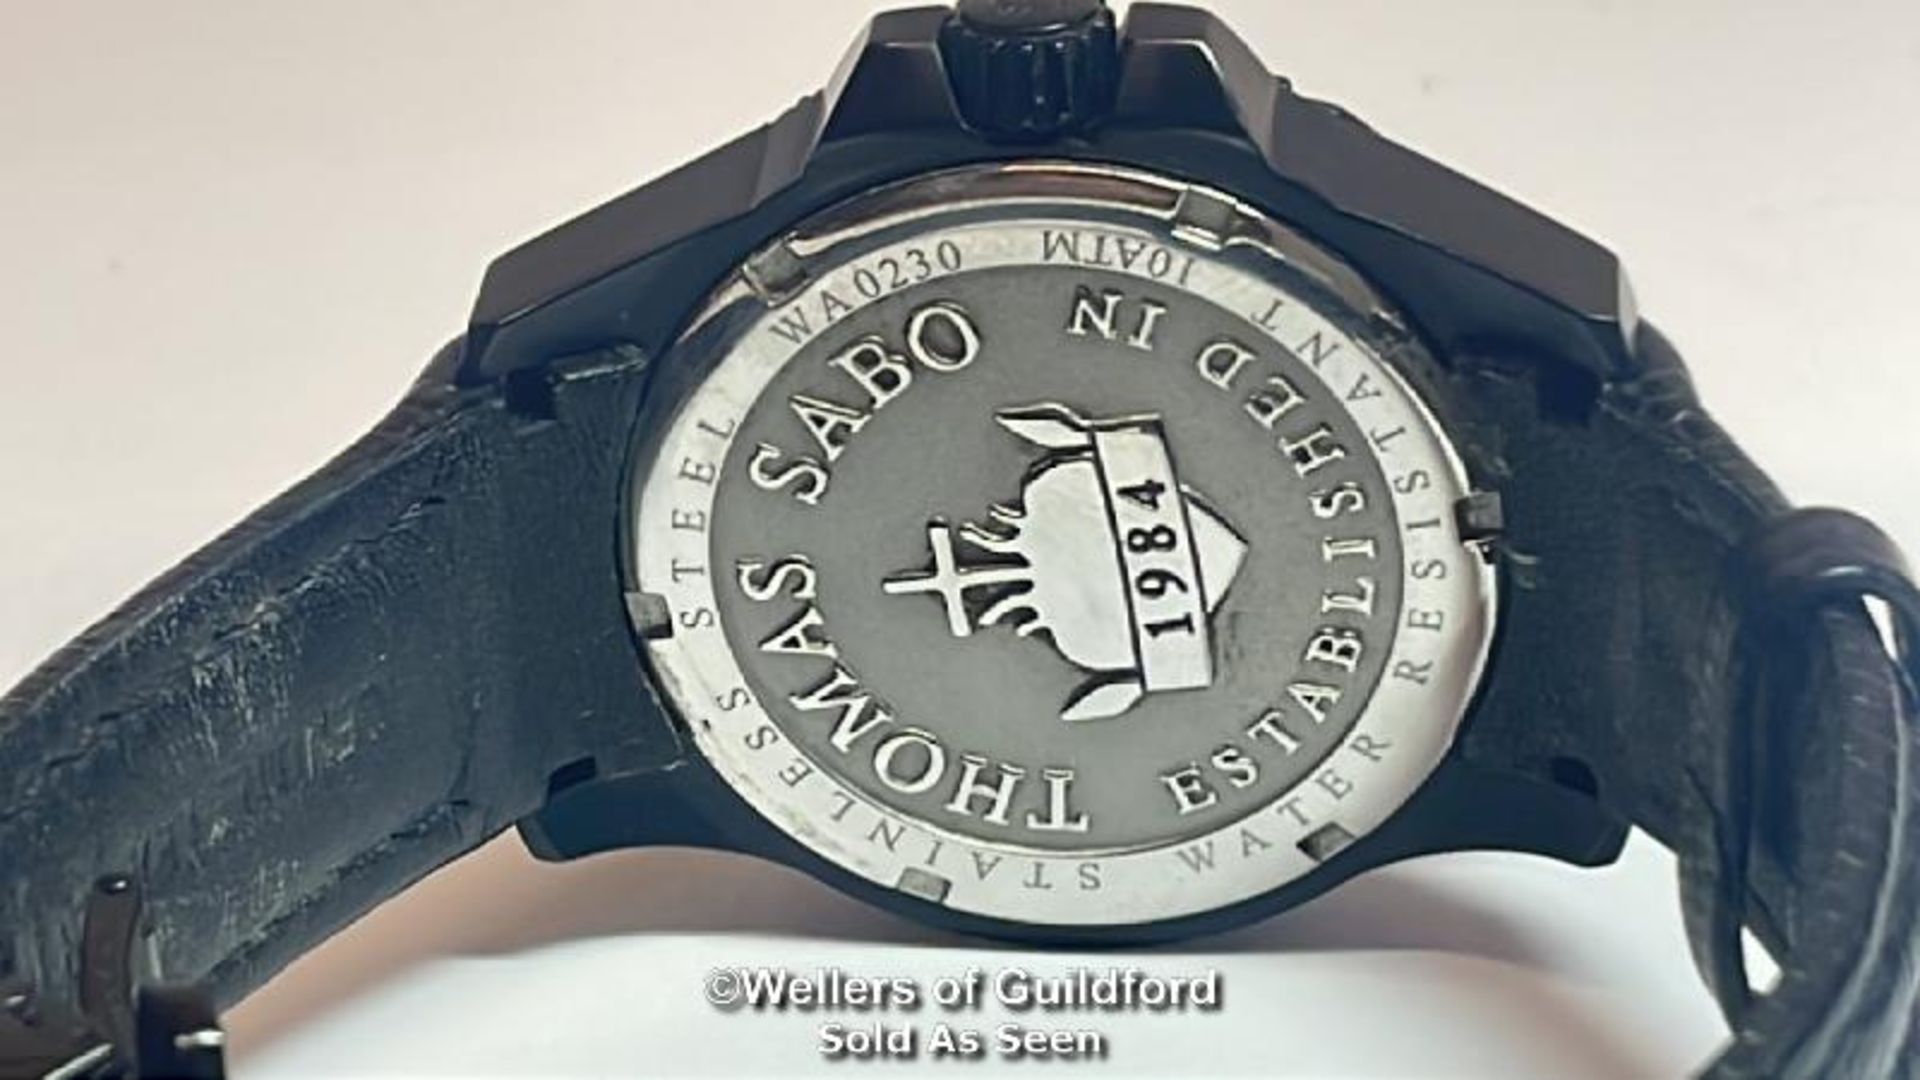 Thomas Sabo matt black stainless-steel wristwatch with dragon motif no. WA0230, with box, 4.4cm - Image 8 of 14